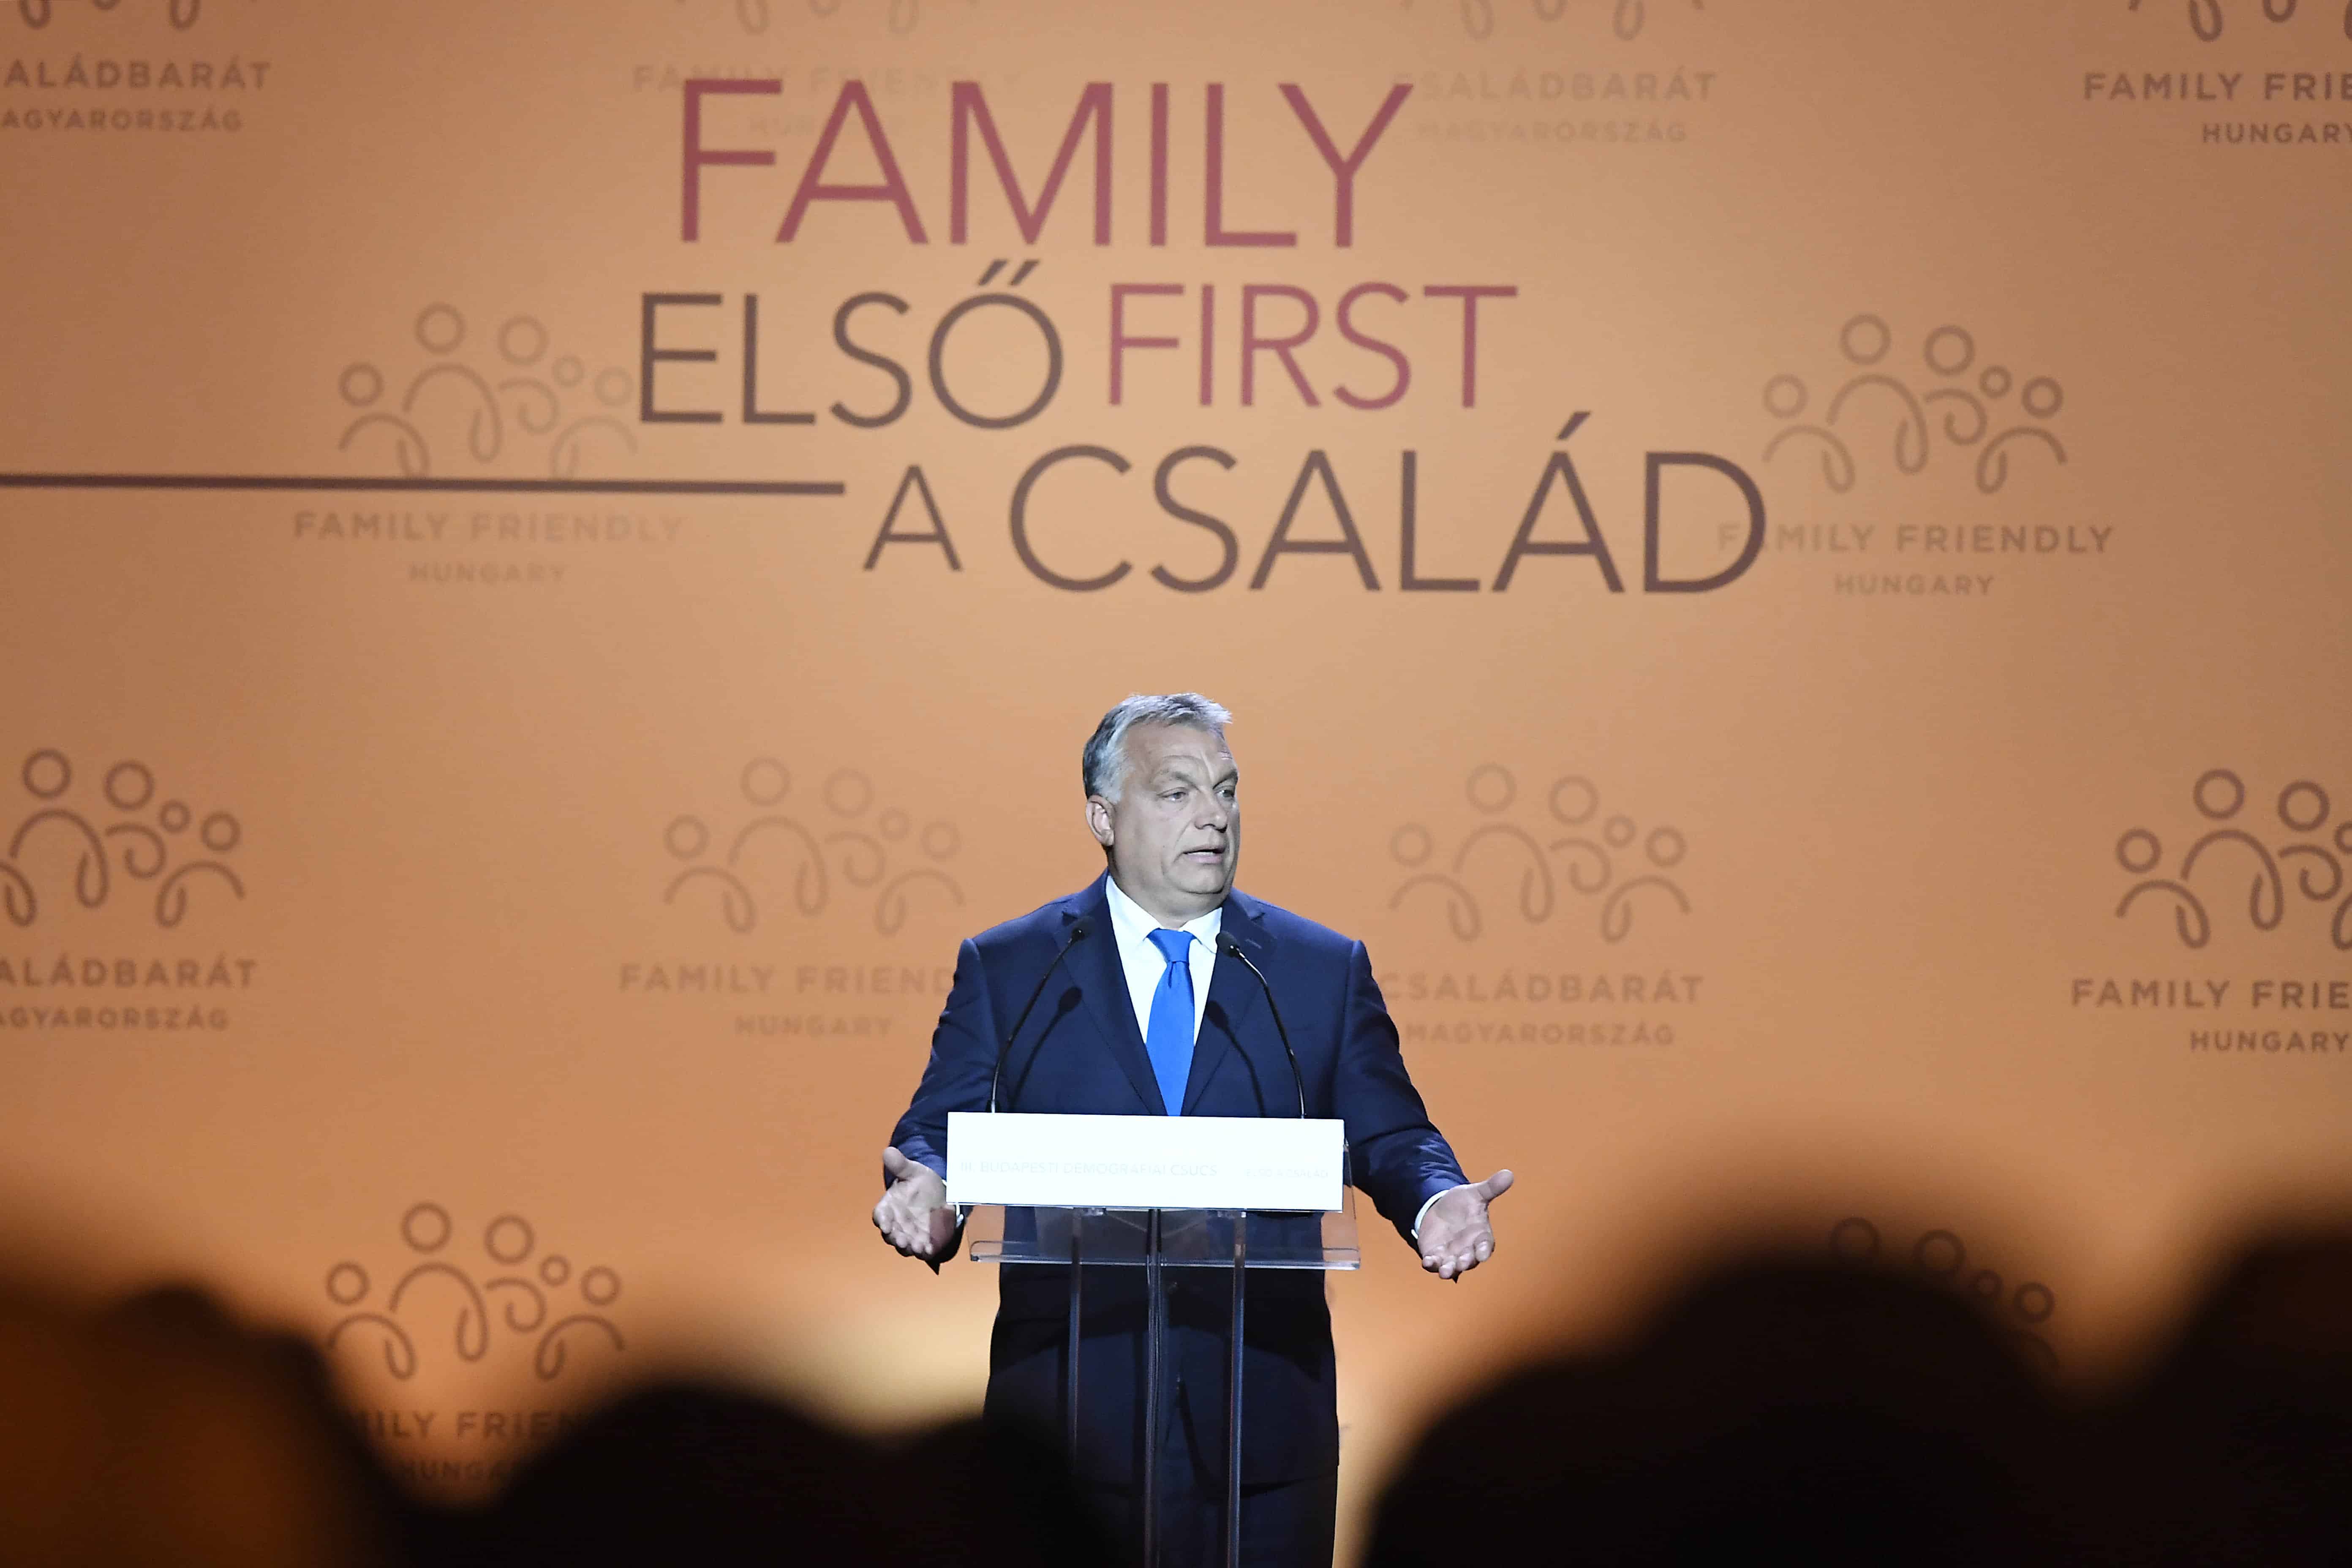 orbán family first